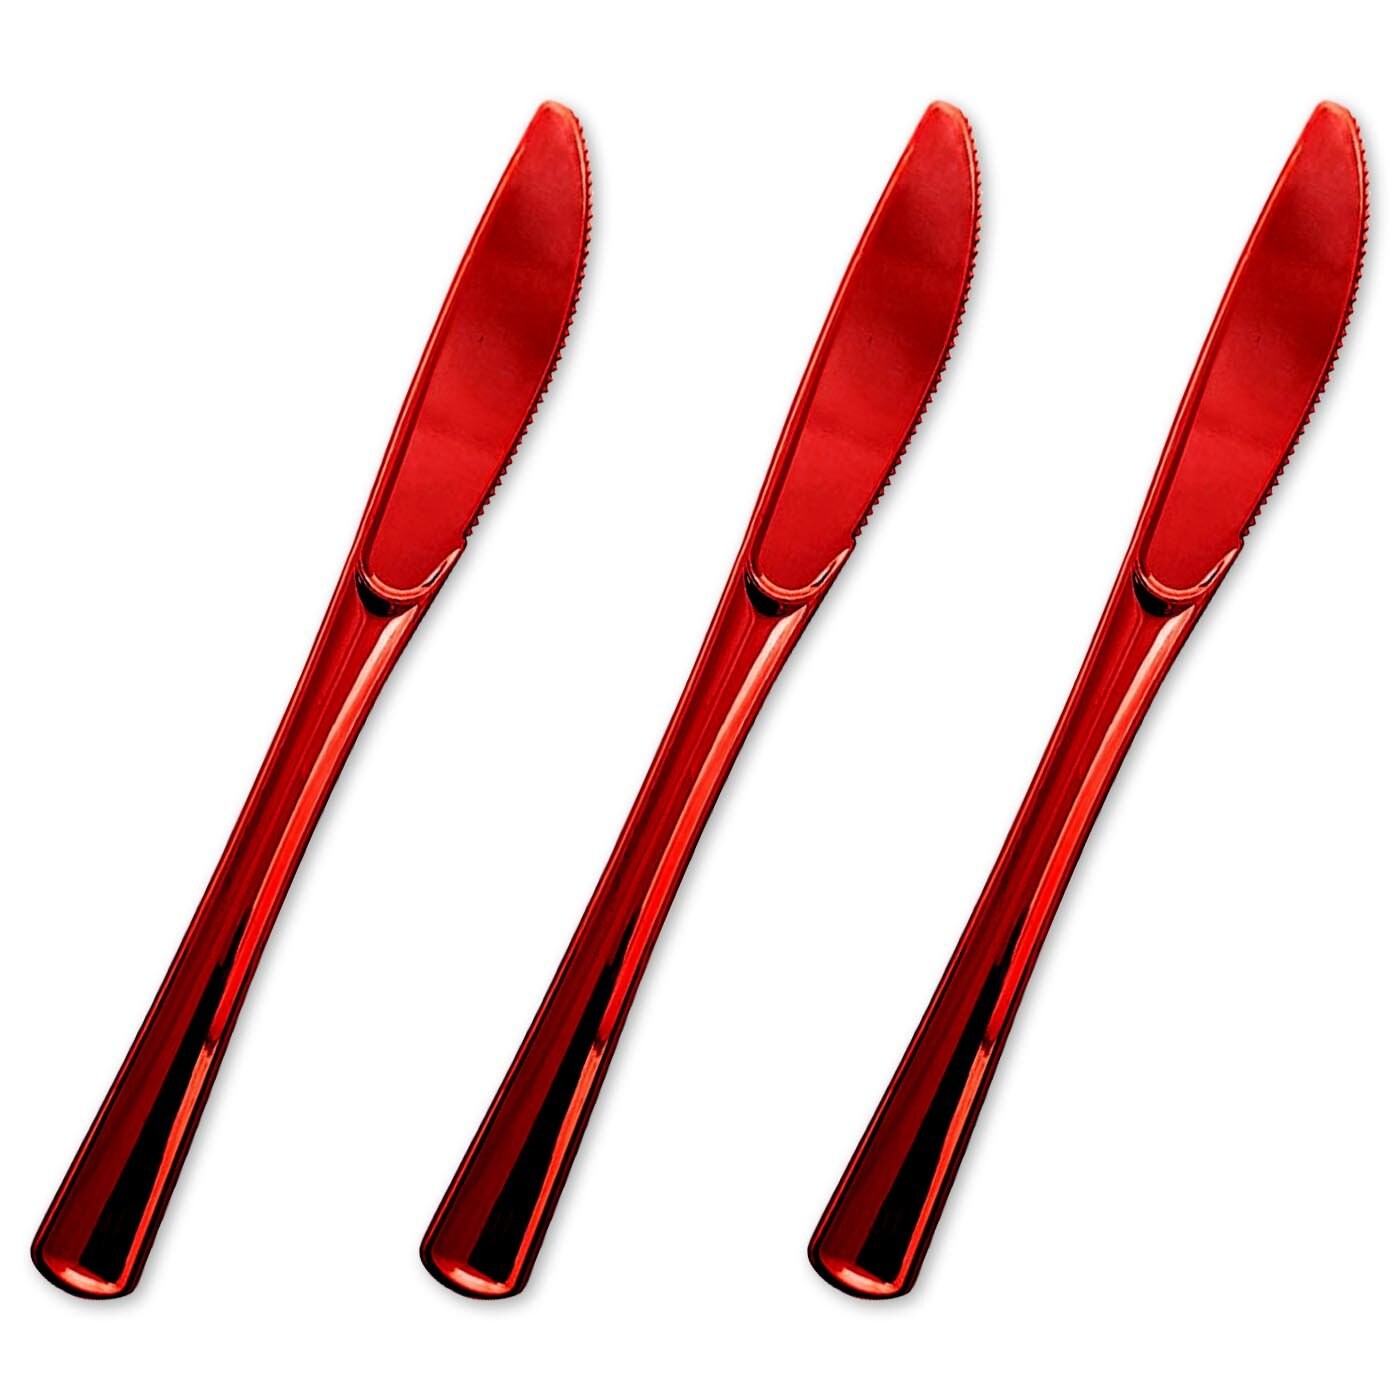 Shiny Metallic Red Plastic Knives (600 Knives)